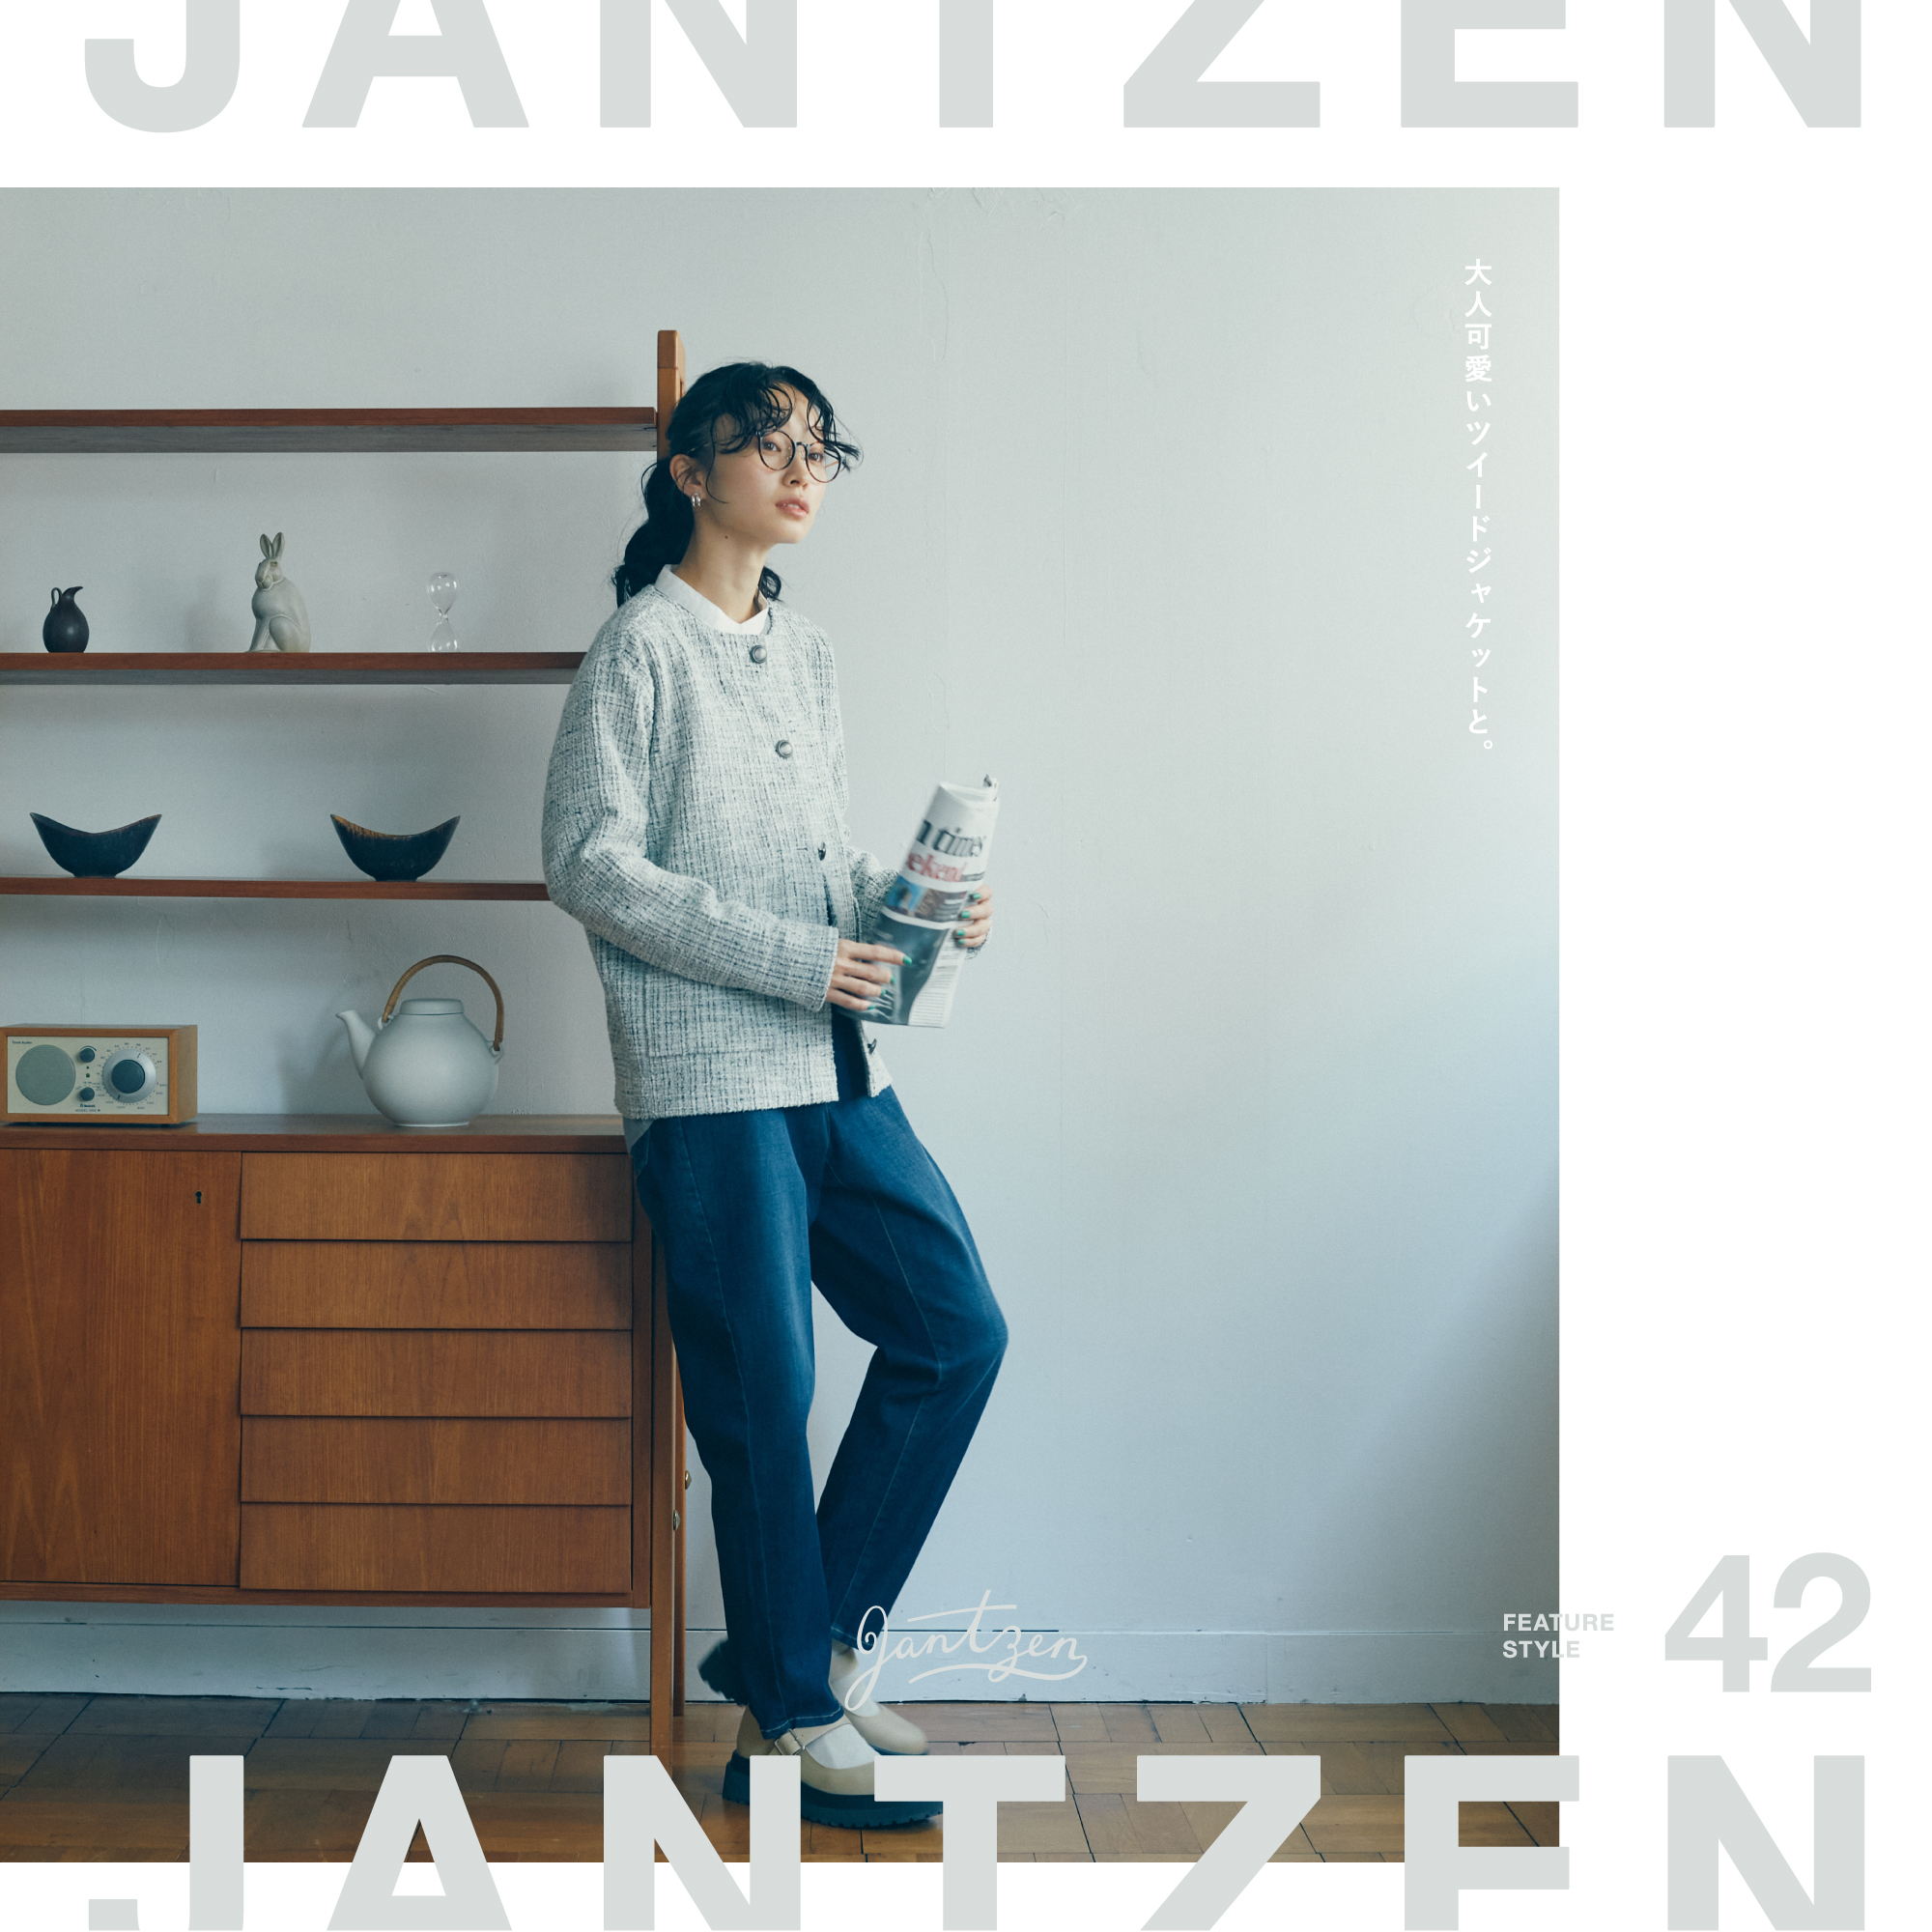 JANTZEN  FEATURE STYLE Vol.42  大人可愛いツイードジャケットと。